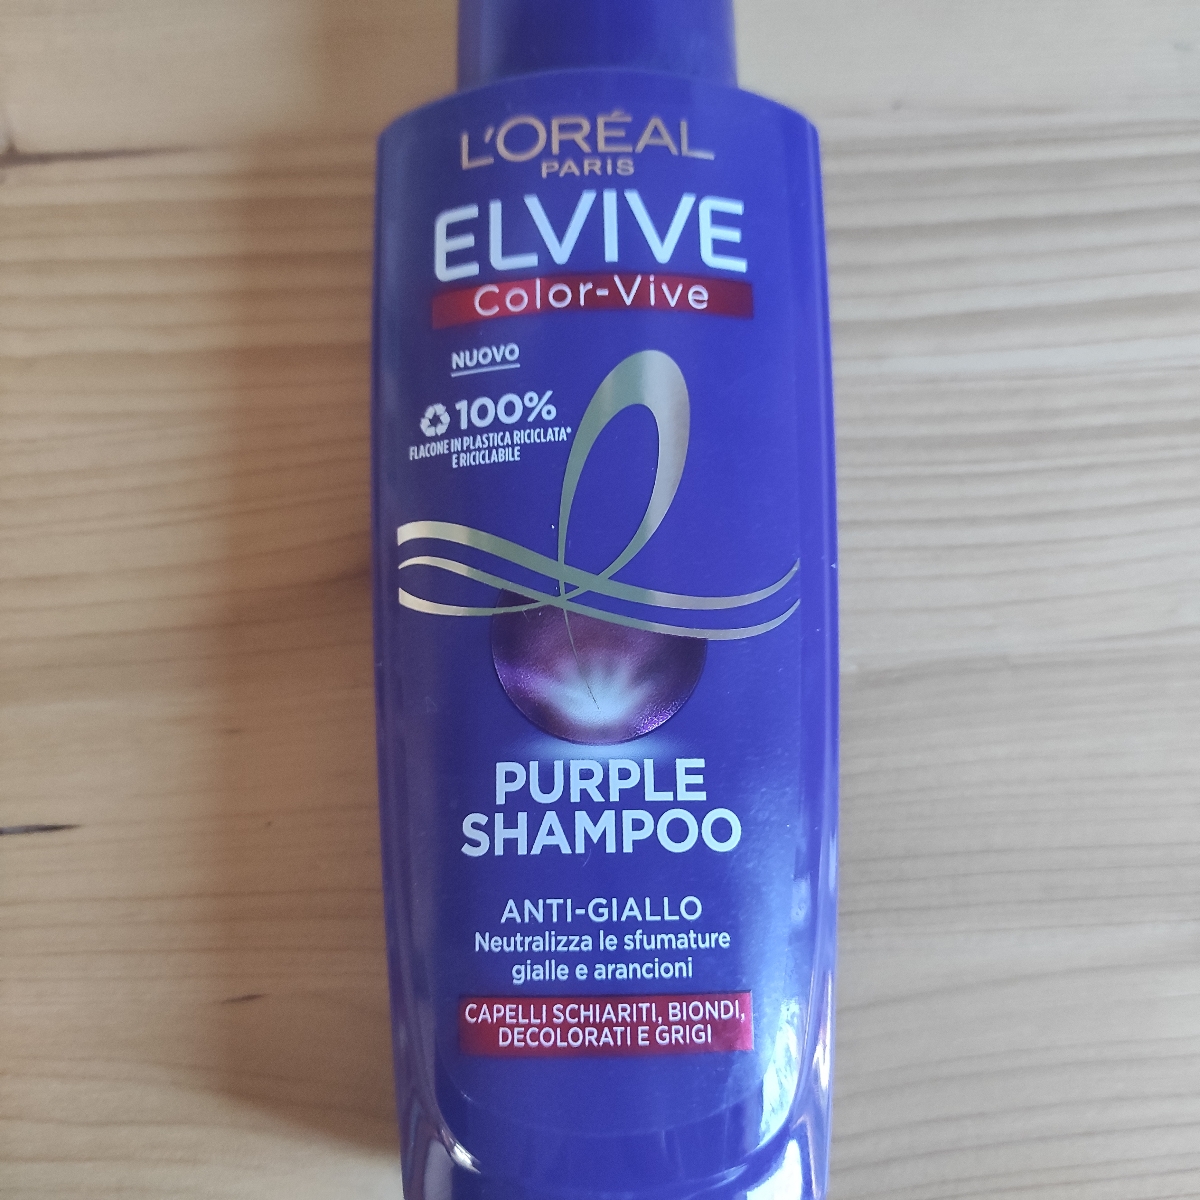 Elvive Shampoo anti giallo Reviews | abillion